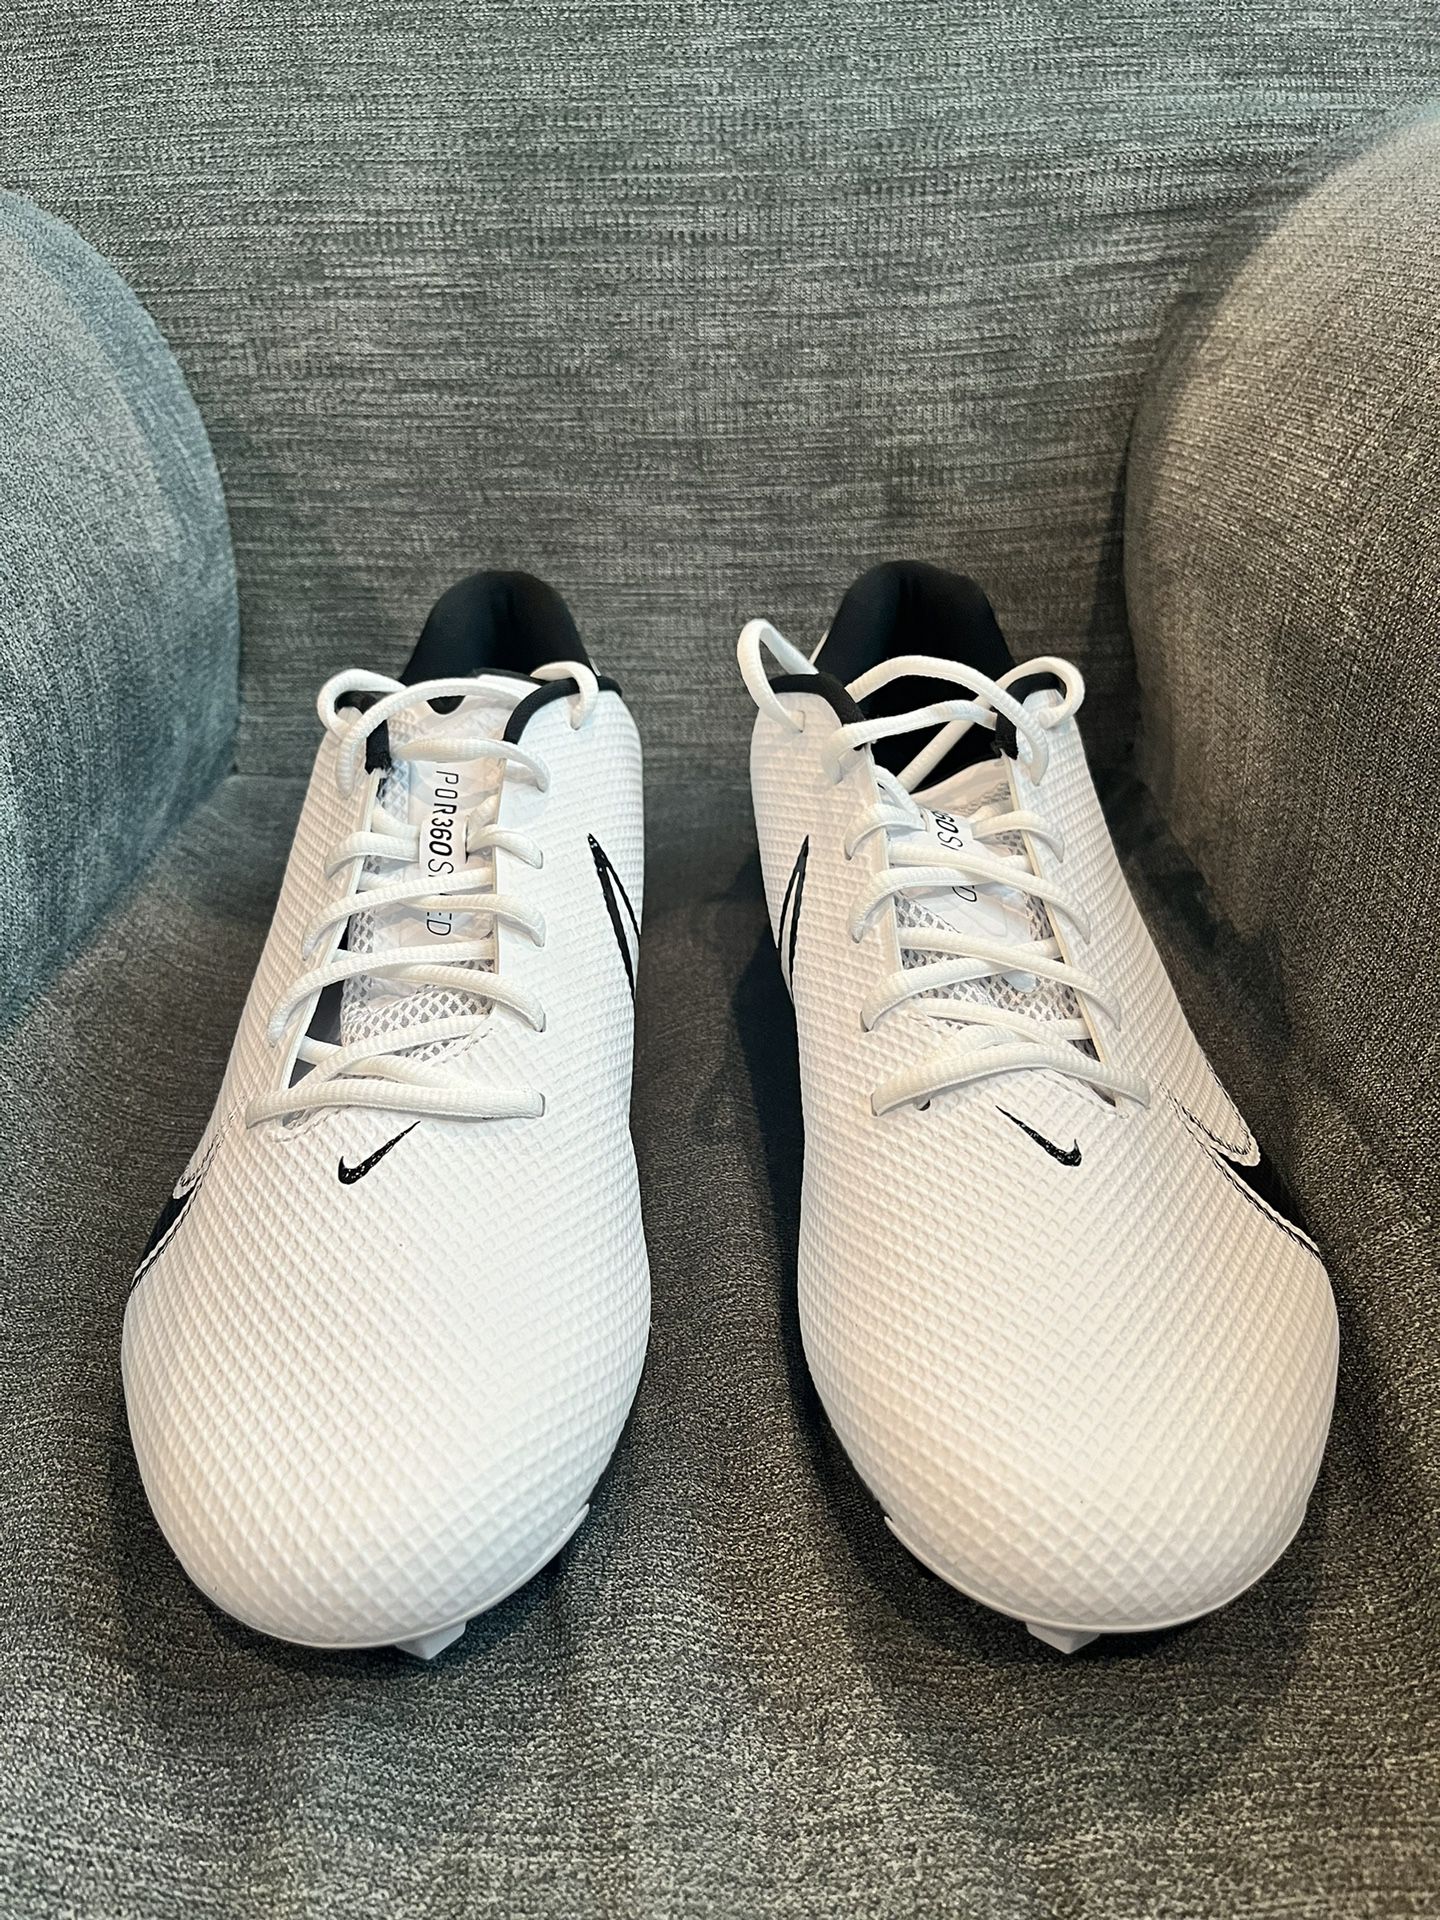 Nike Vapor Edge Speed 360 White Football Cleats Men's Size 13 Wide CV6350-100🔥